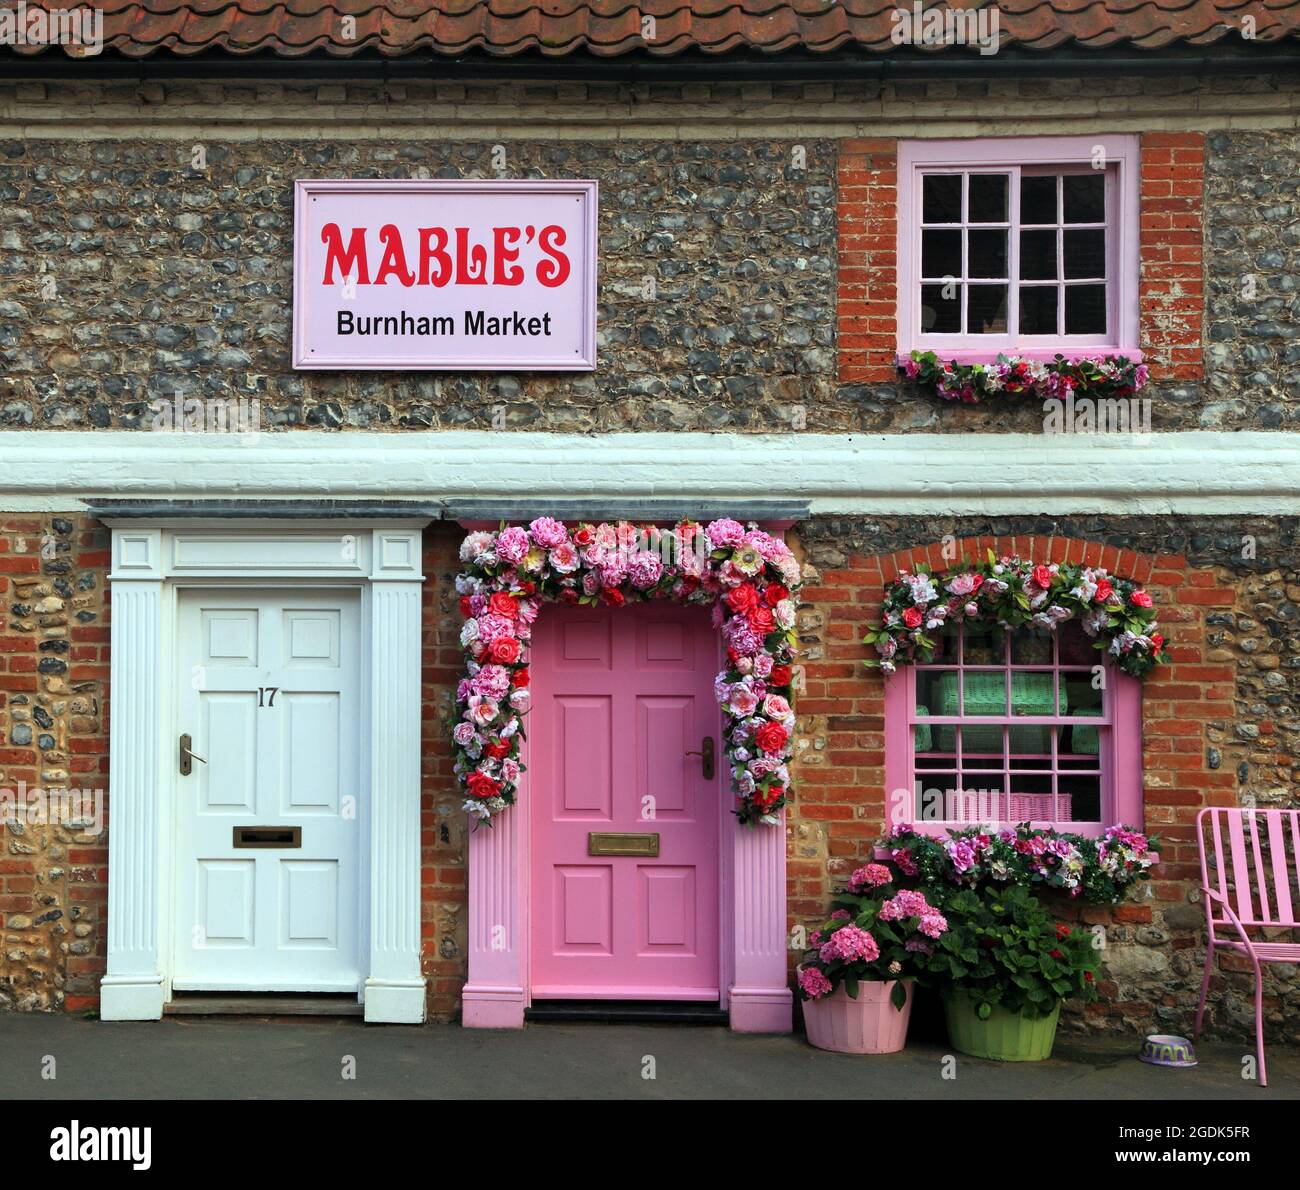 Mable's Shop, entrada, puerta florida, flores, decoración floral, Burnham Market, Norfolk Foto de stock